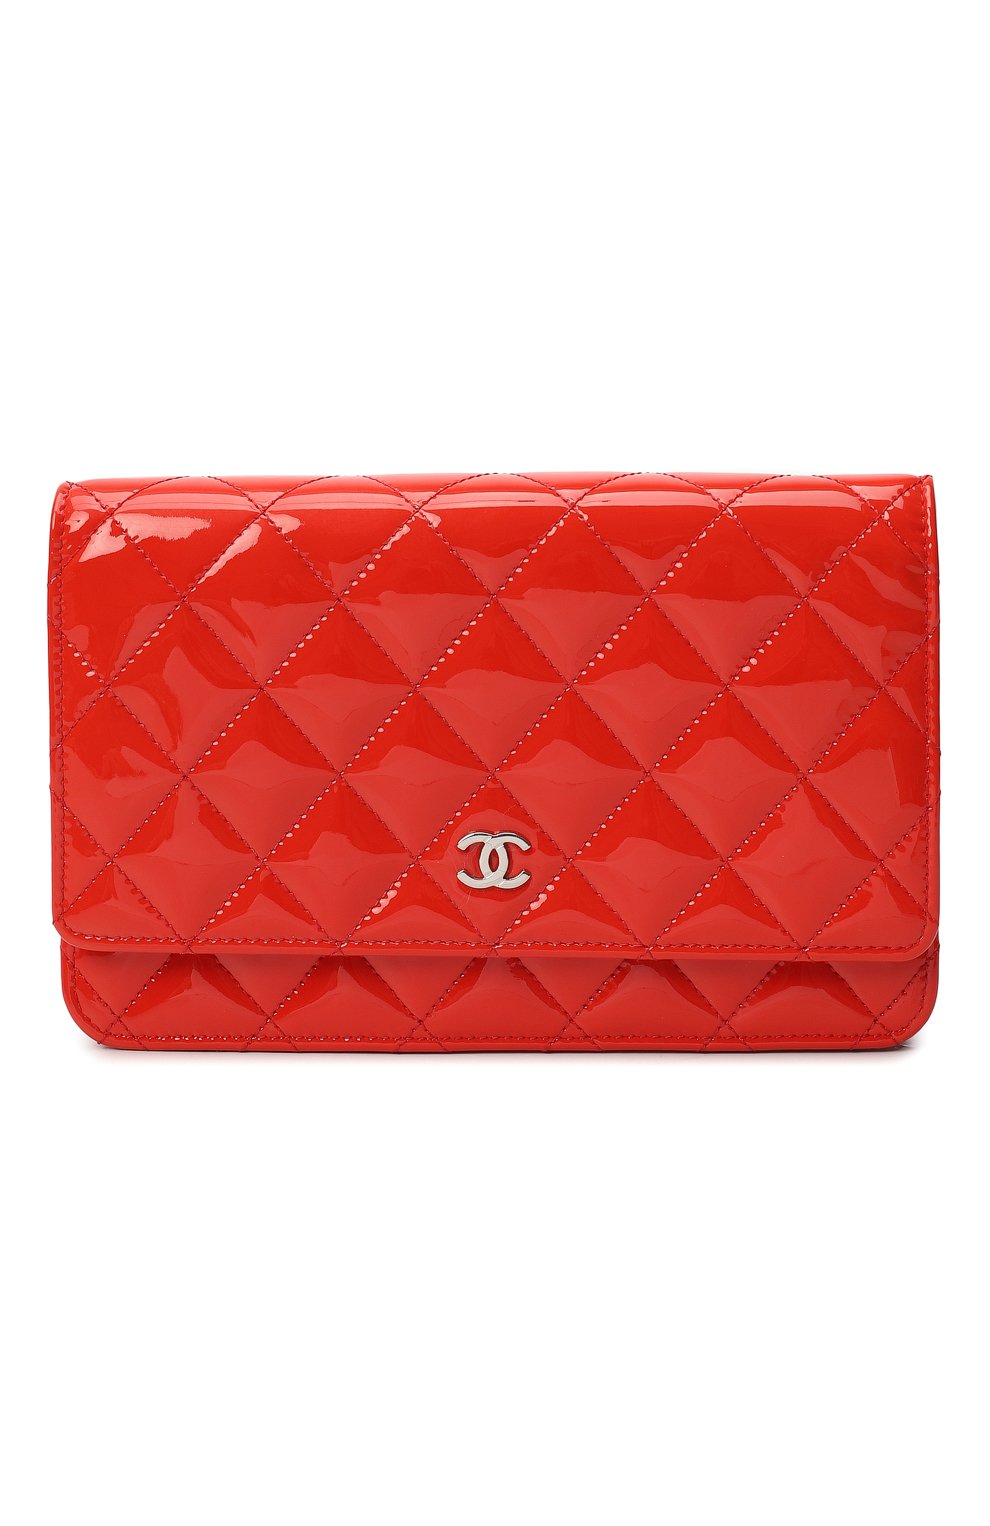 Сумка CC Wallet On Chain | Chanel | Красный - 1